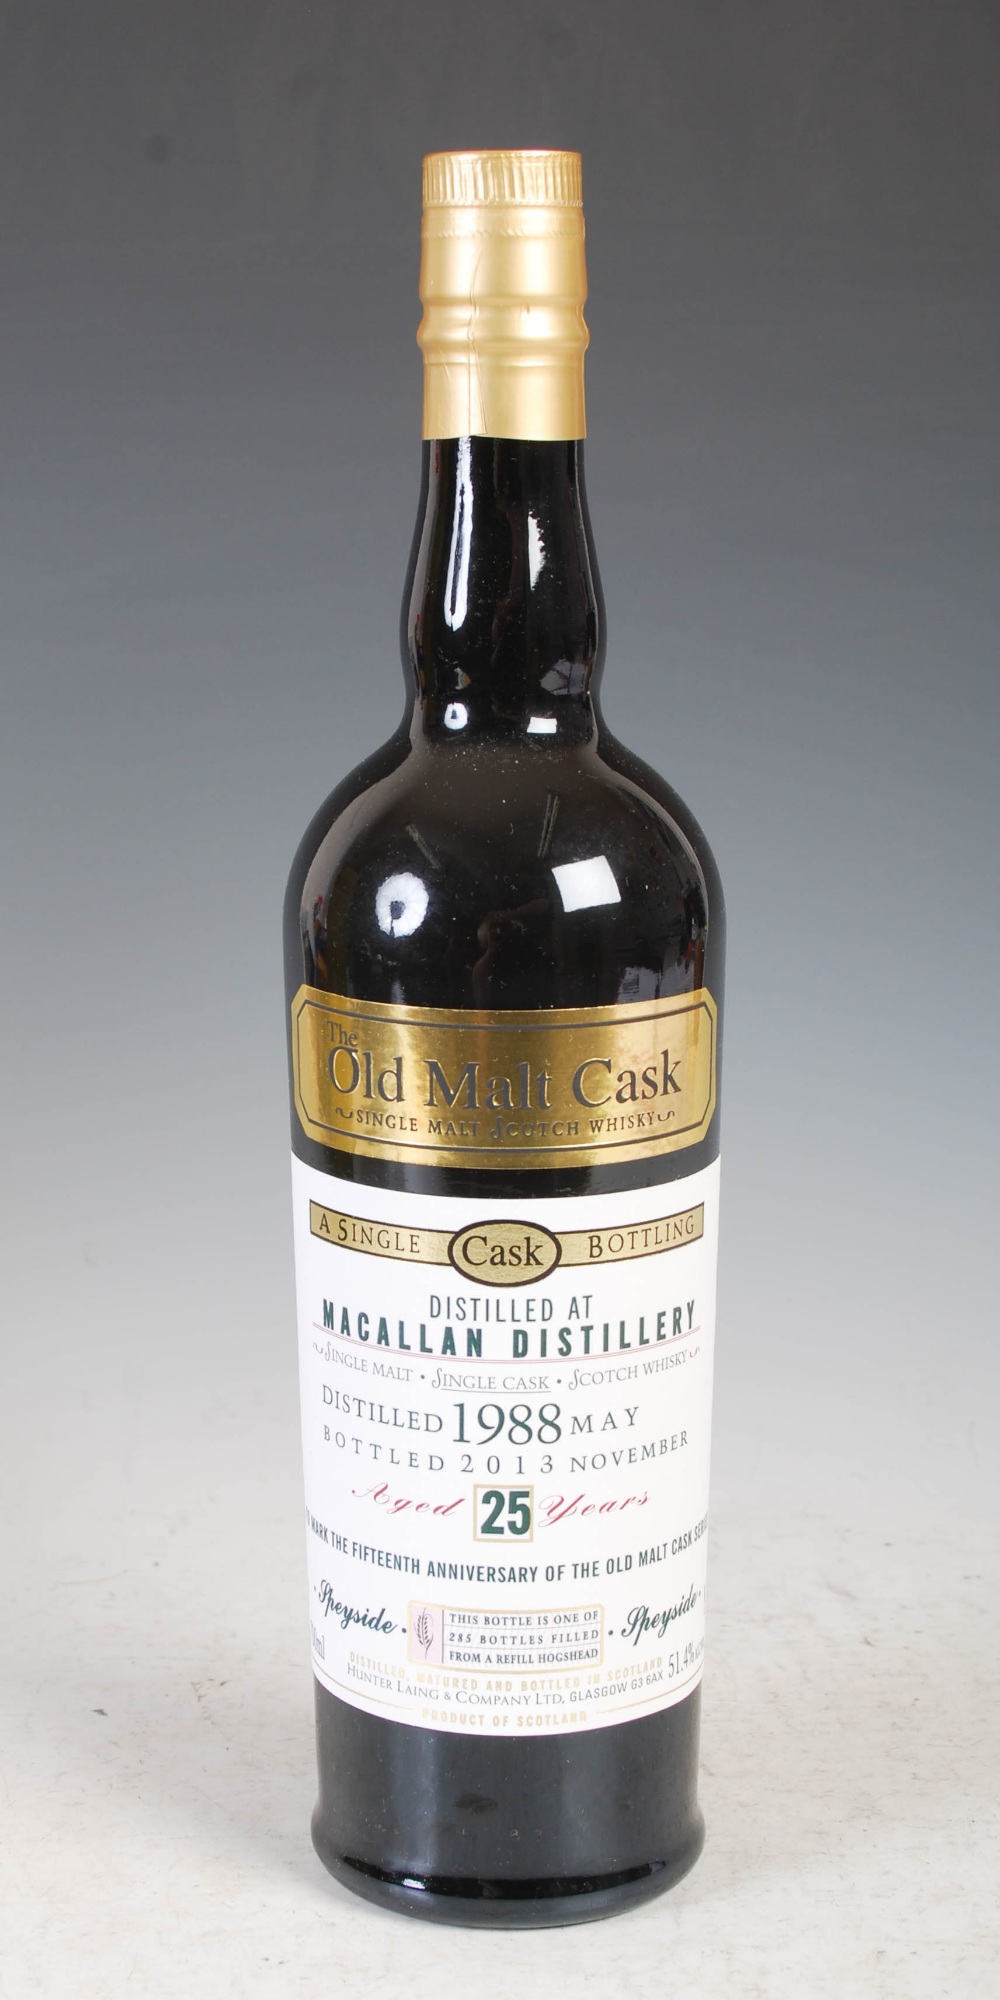 A boxed bottle of The Old Malt Cask, Single Malt Scotch Whisky, A Single Cask Bottling Distilled - Image 2 of 6